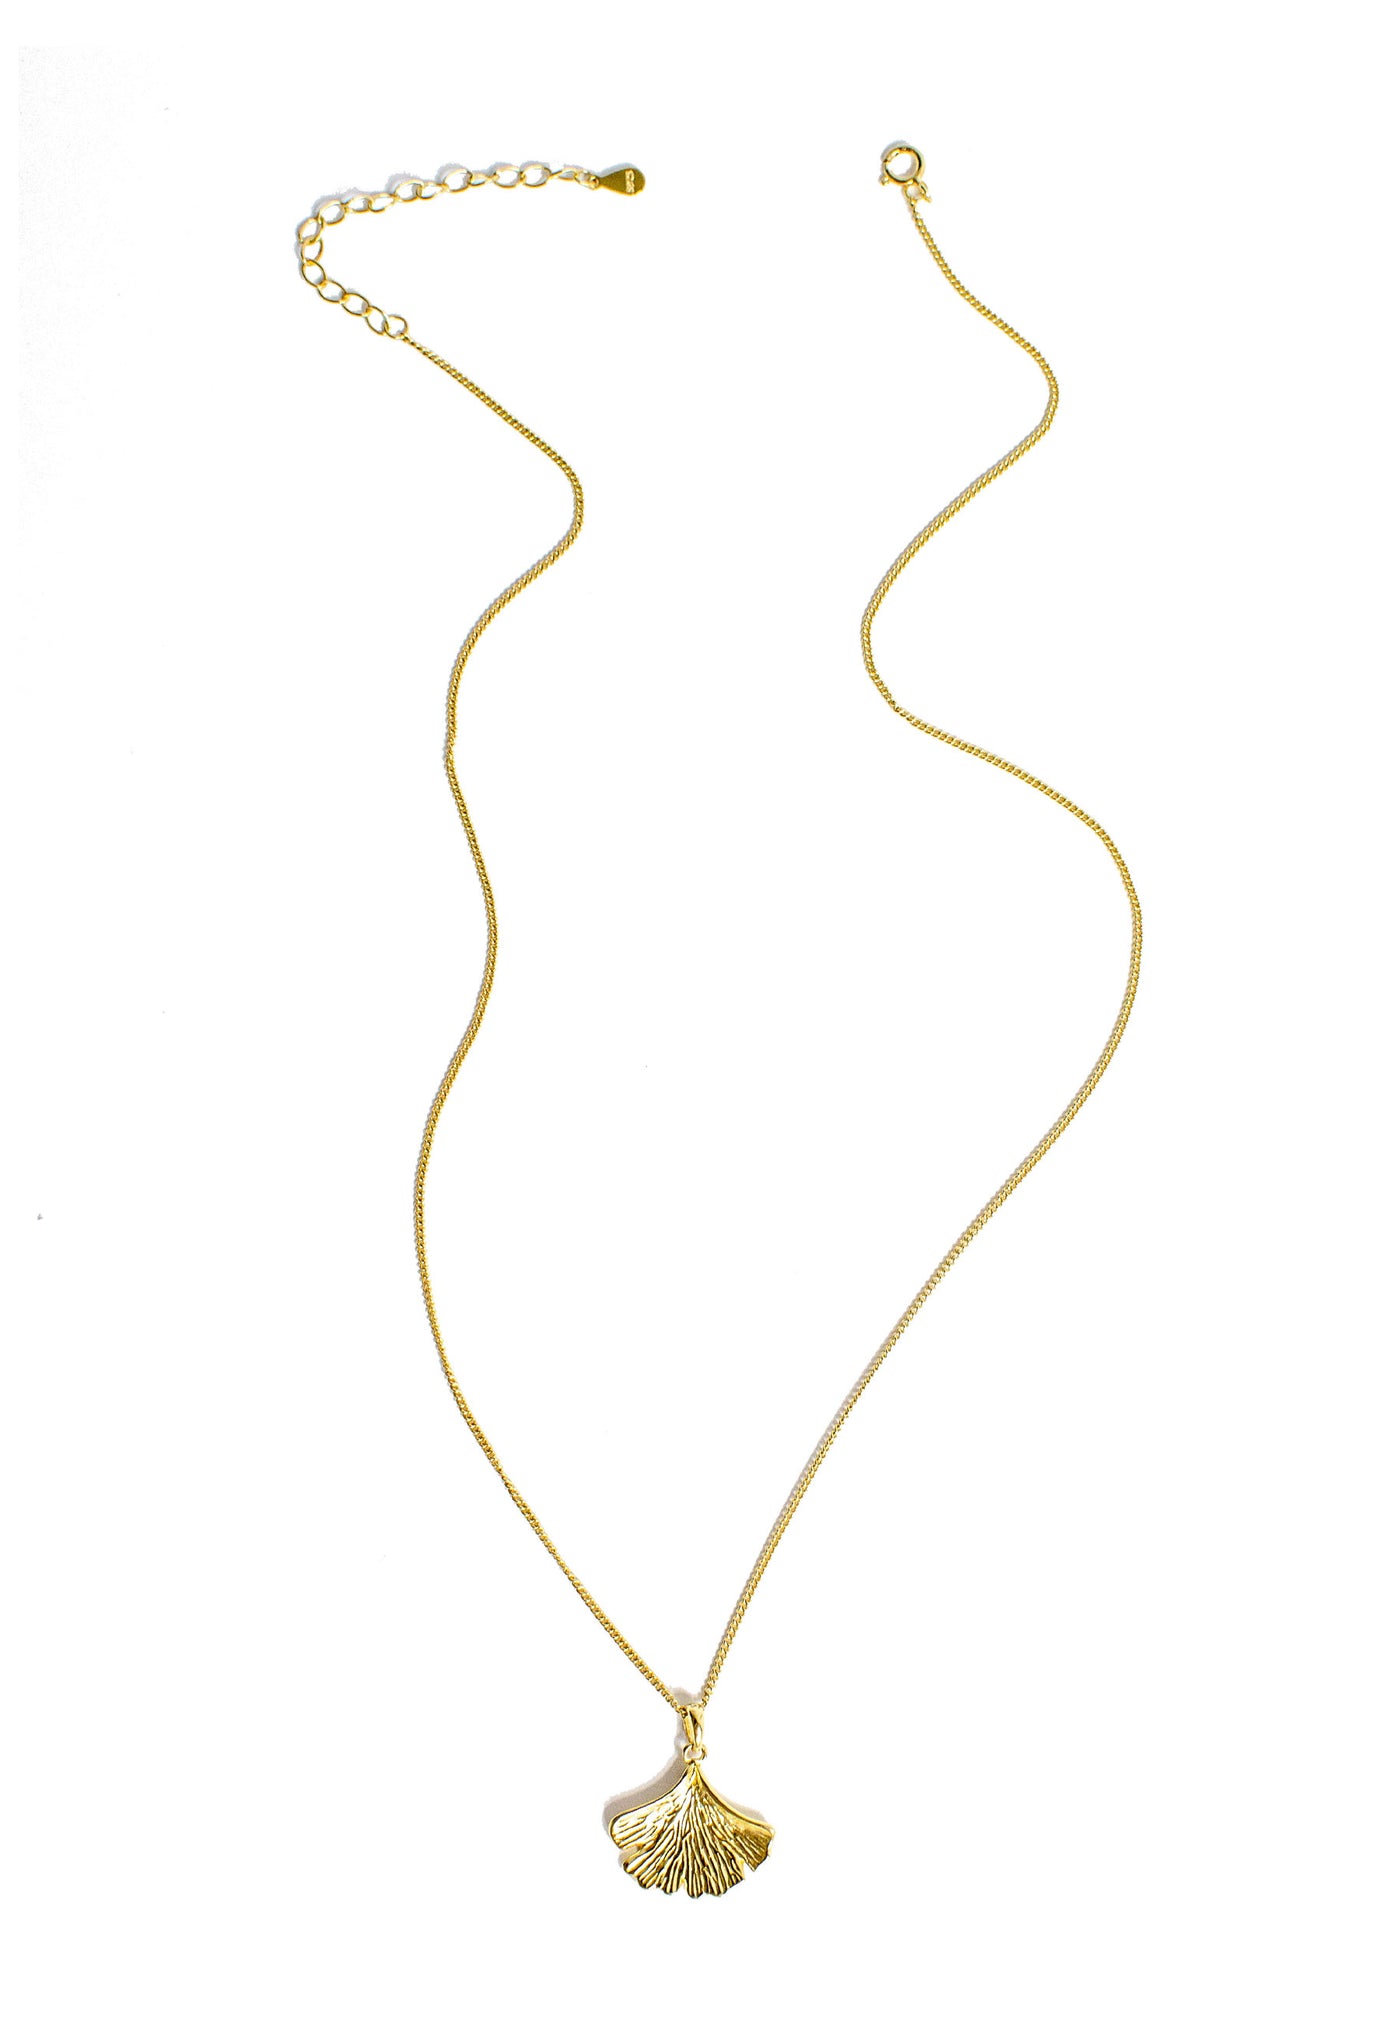 Ginkgo Leaf Pendant Necklace Sterling Silver Gold